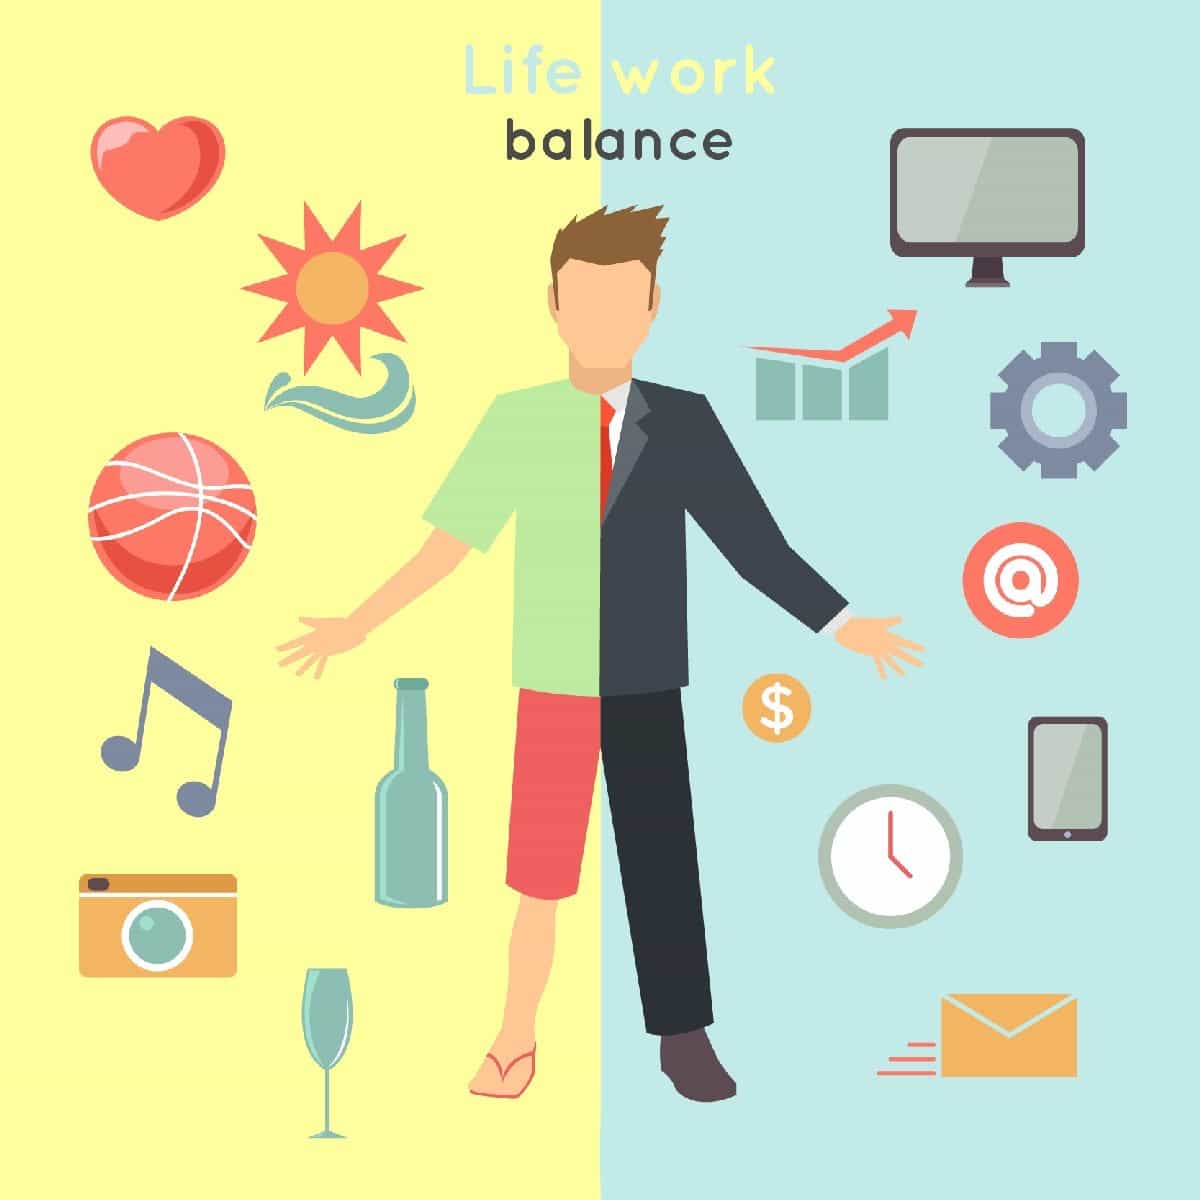 importance of work life balance